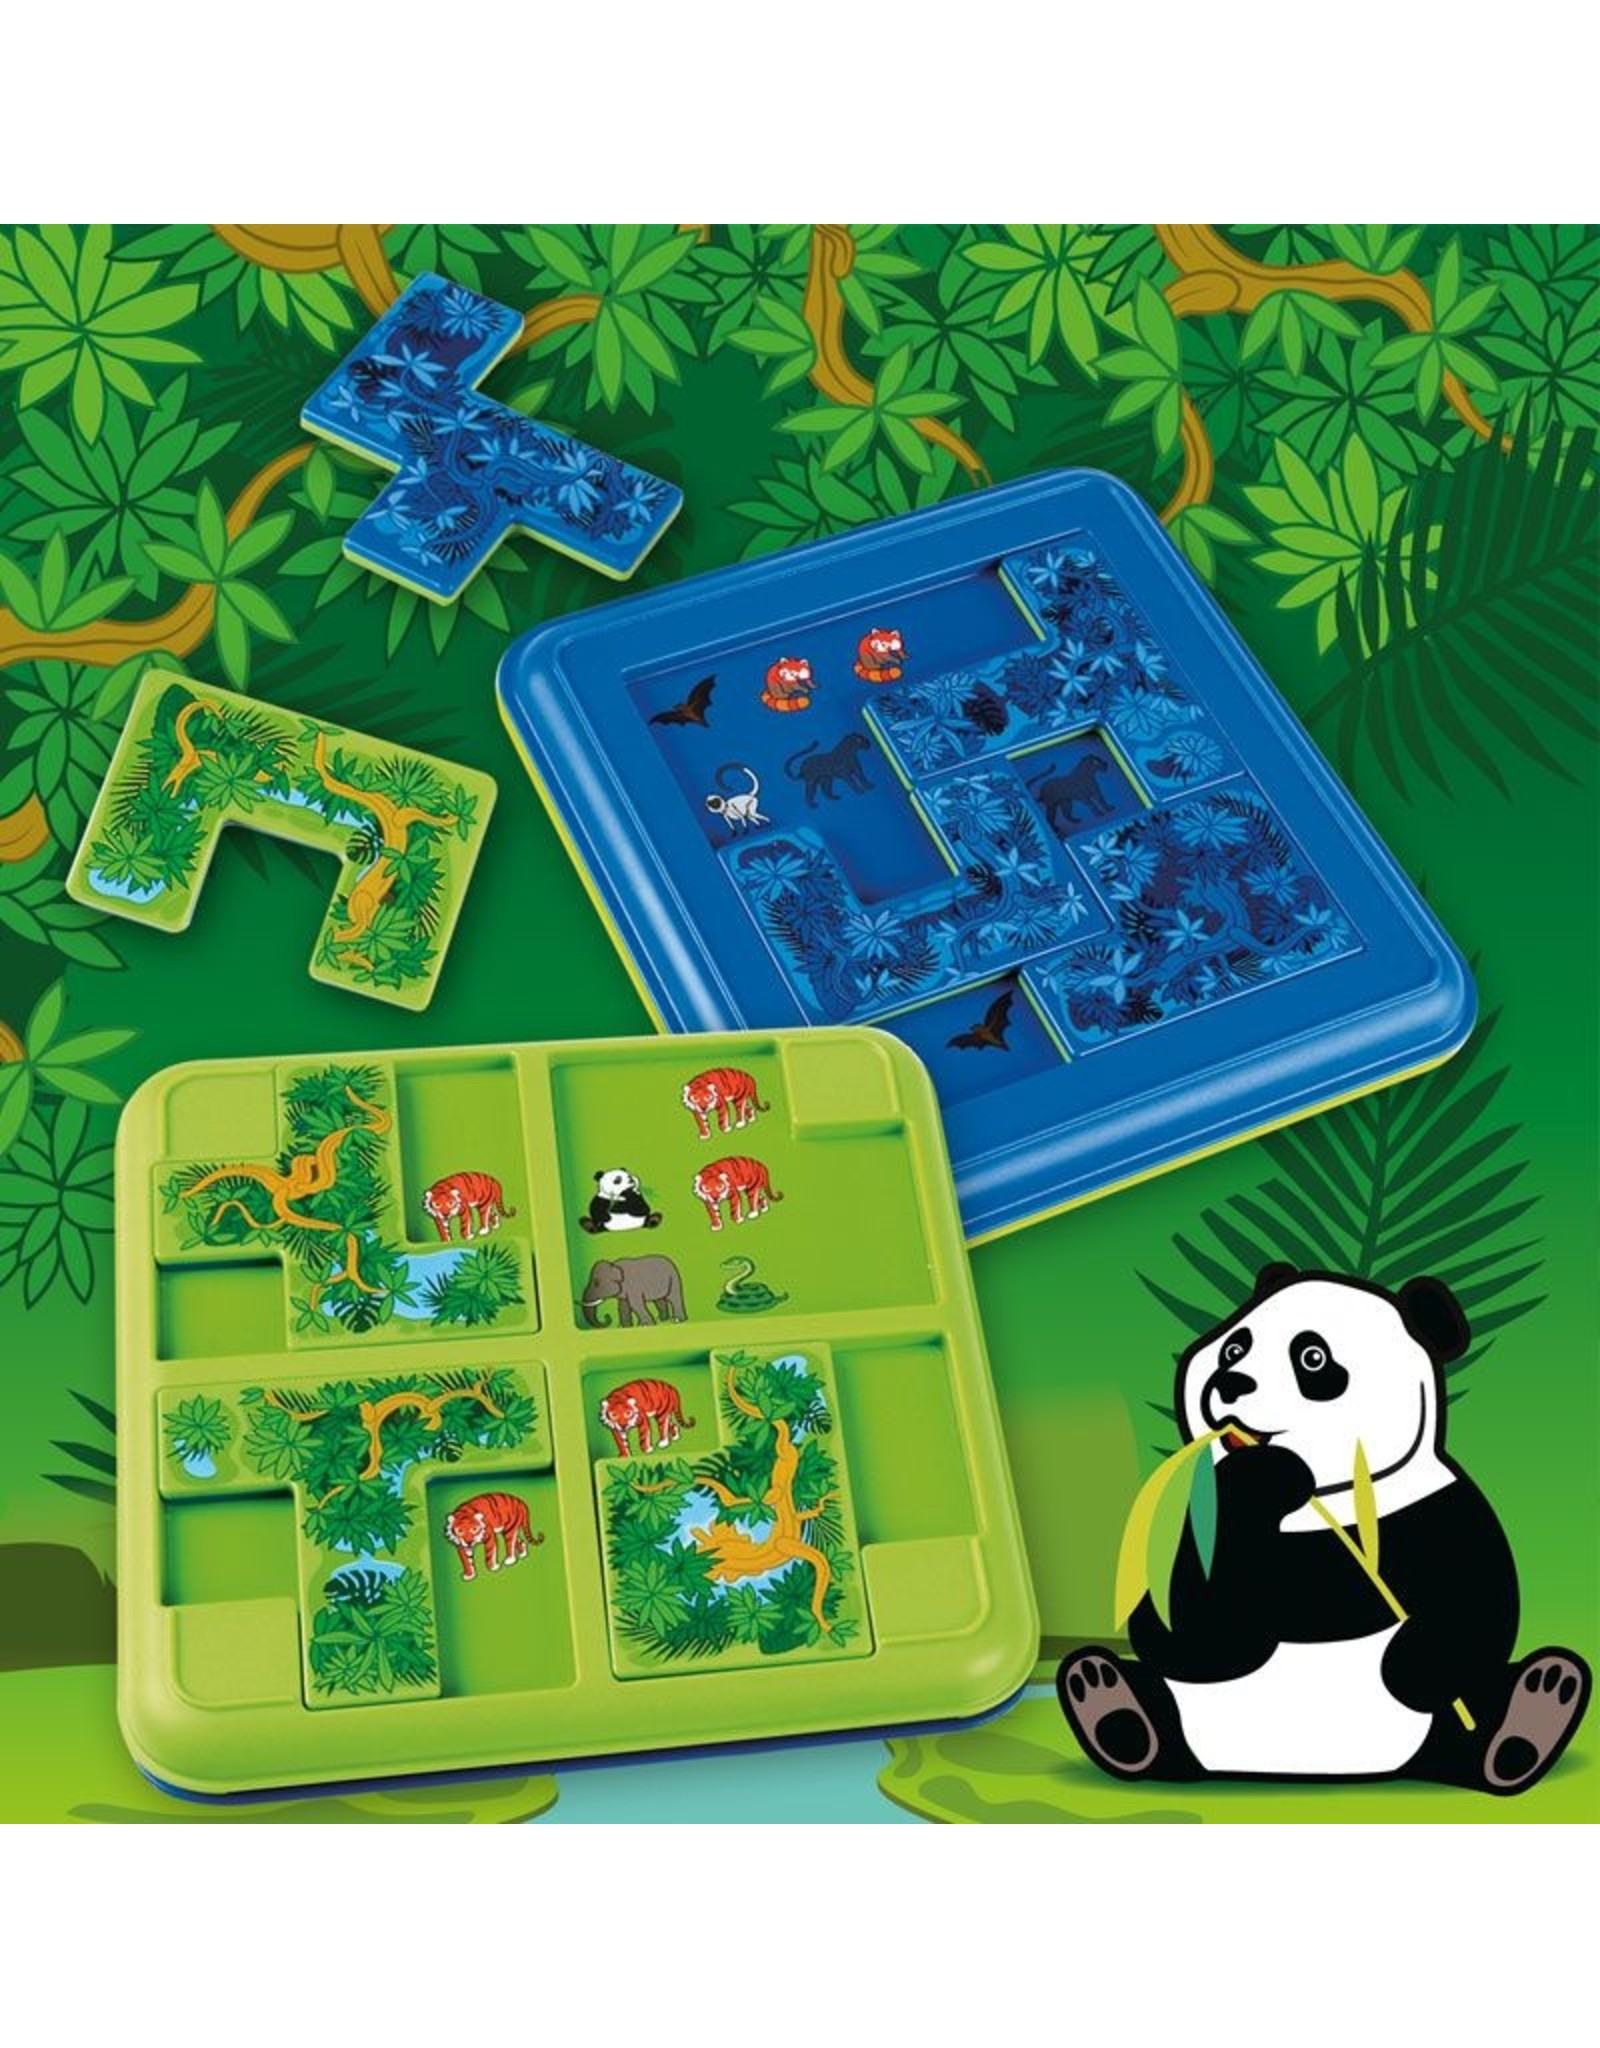 Smart Games Jungle Hide & Seek